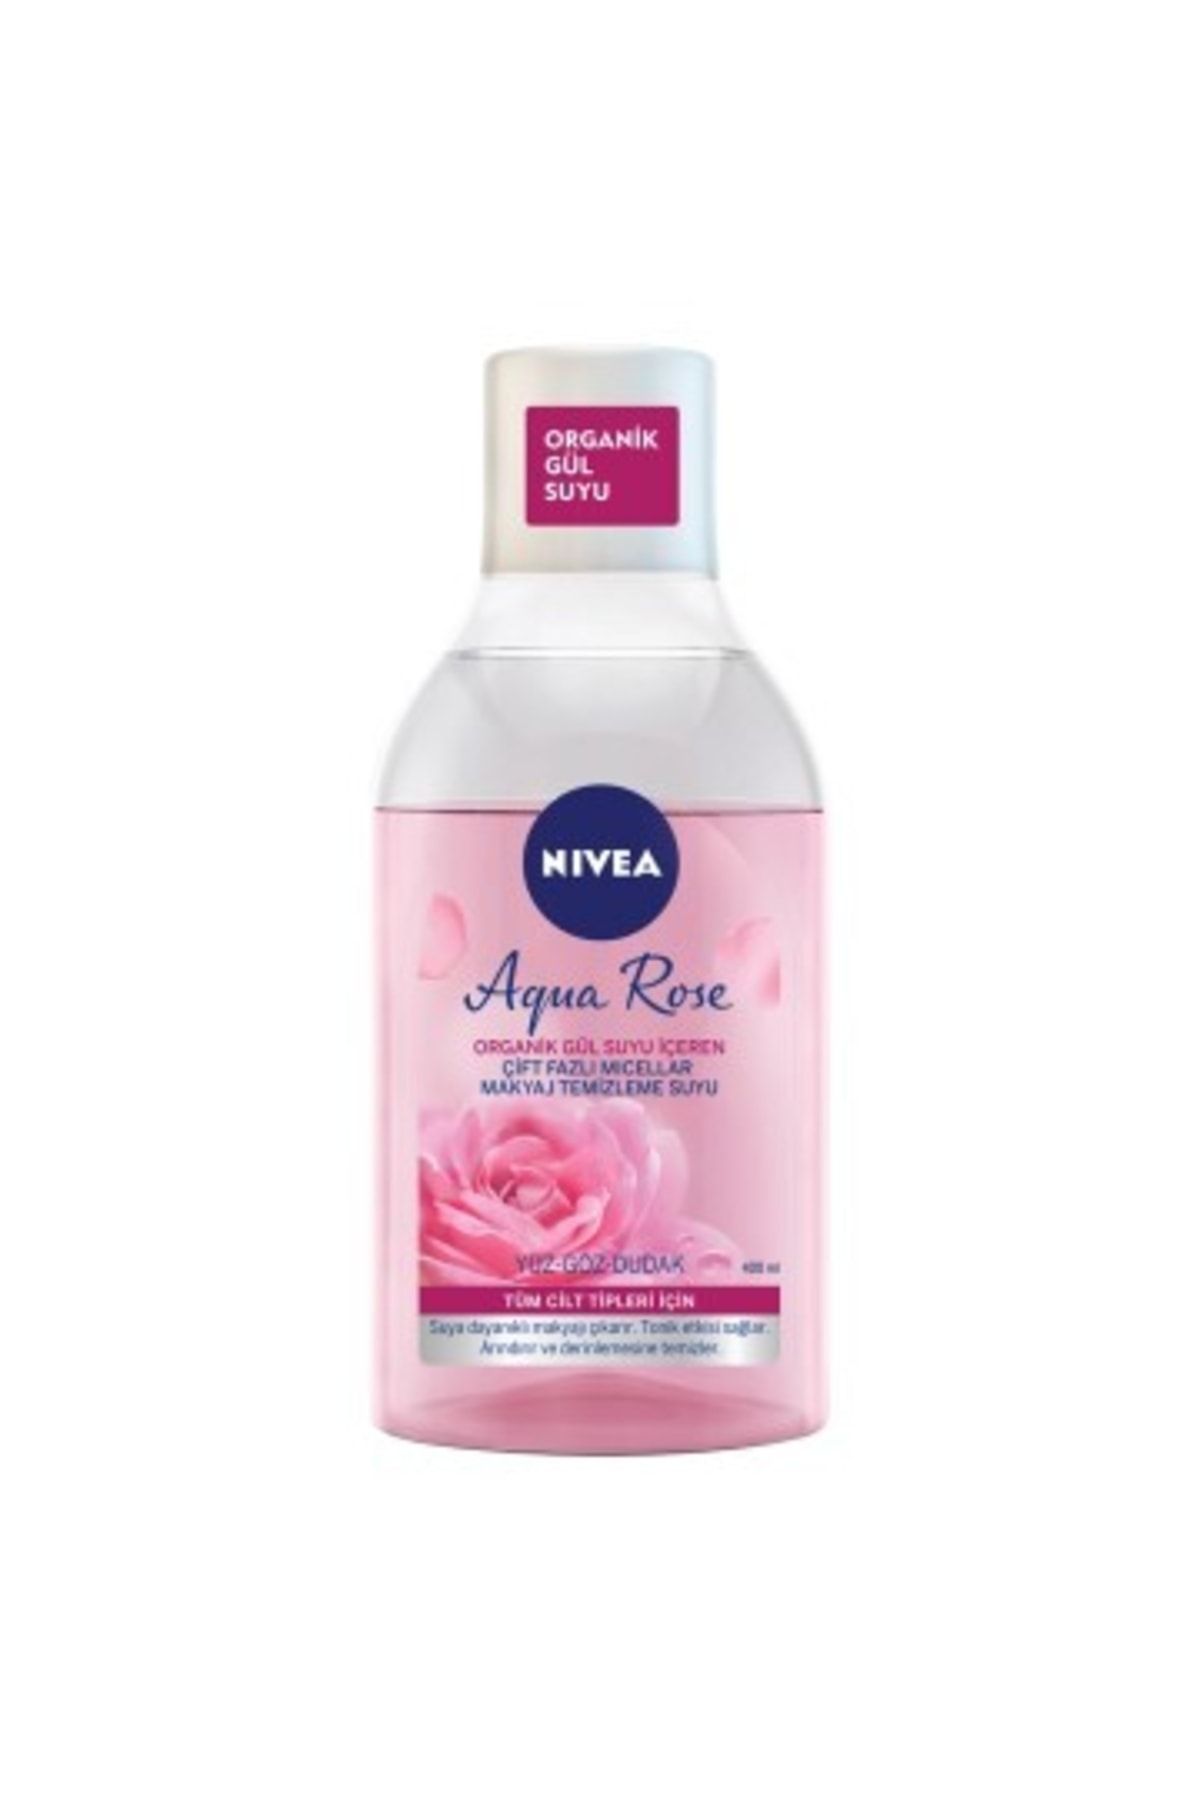 NIVEA Aqua rose micellair gül suyu içeren çift bazlı makyaj temizleme suyu 400ml